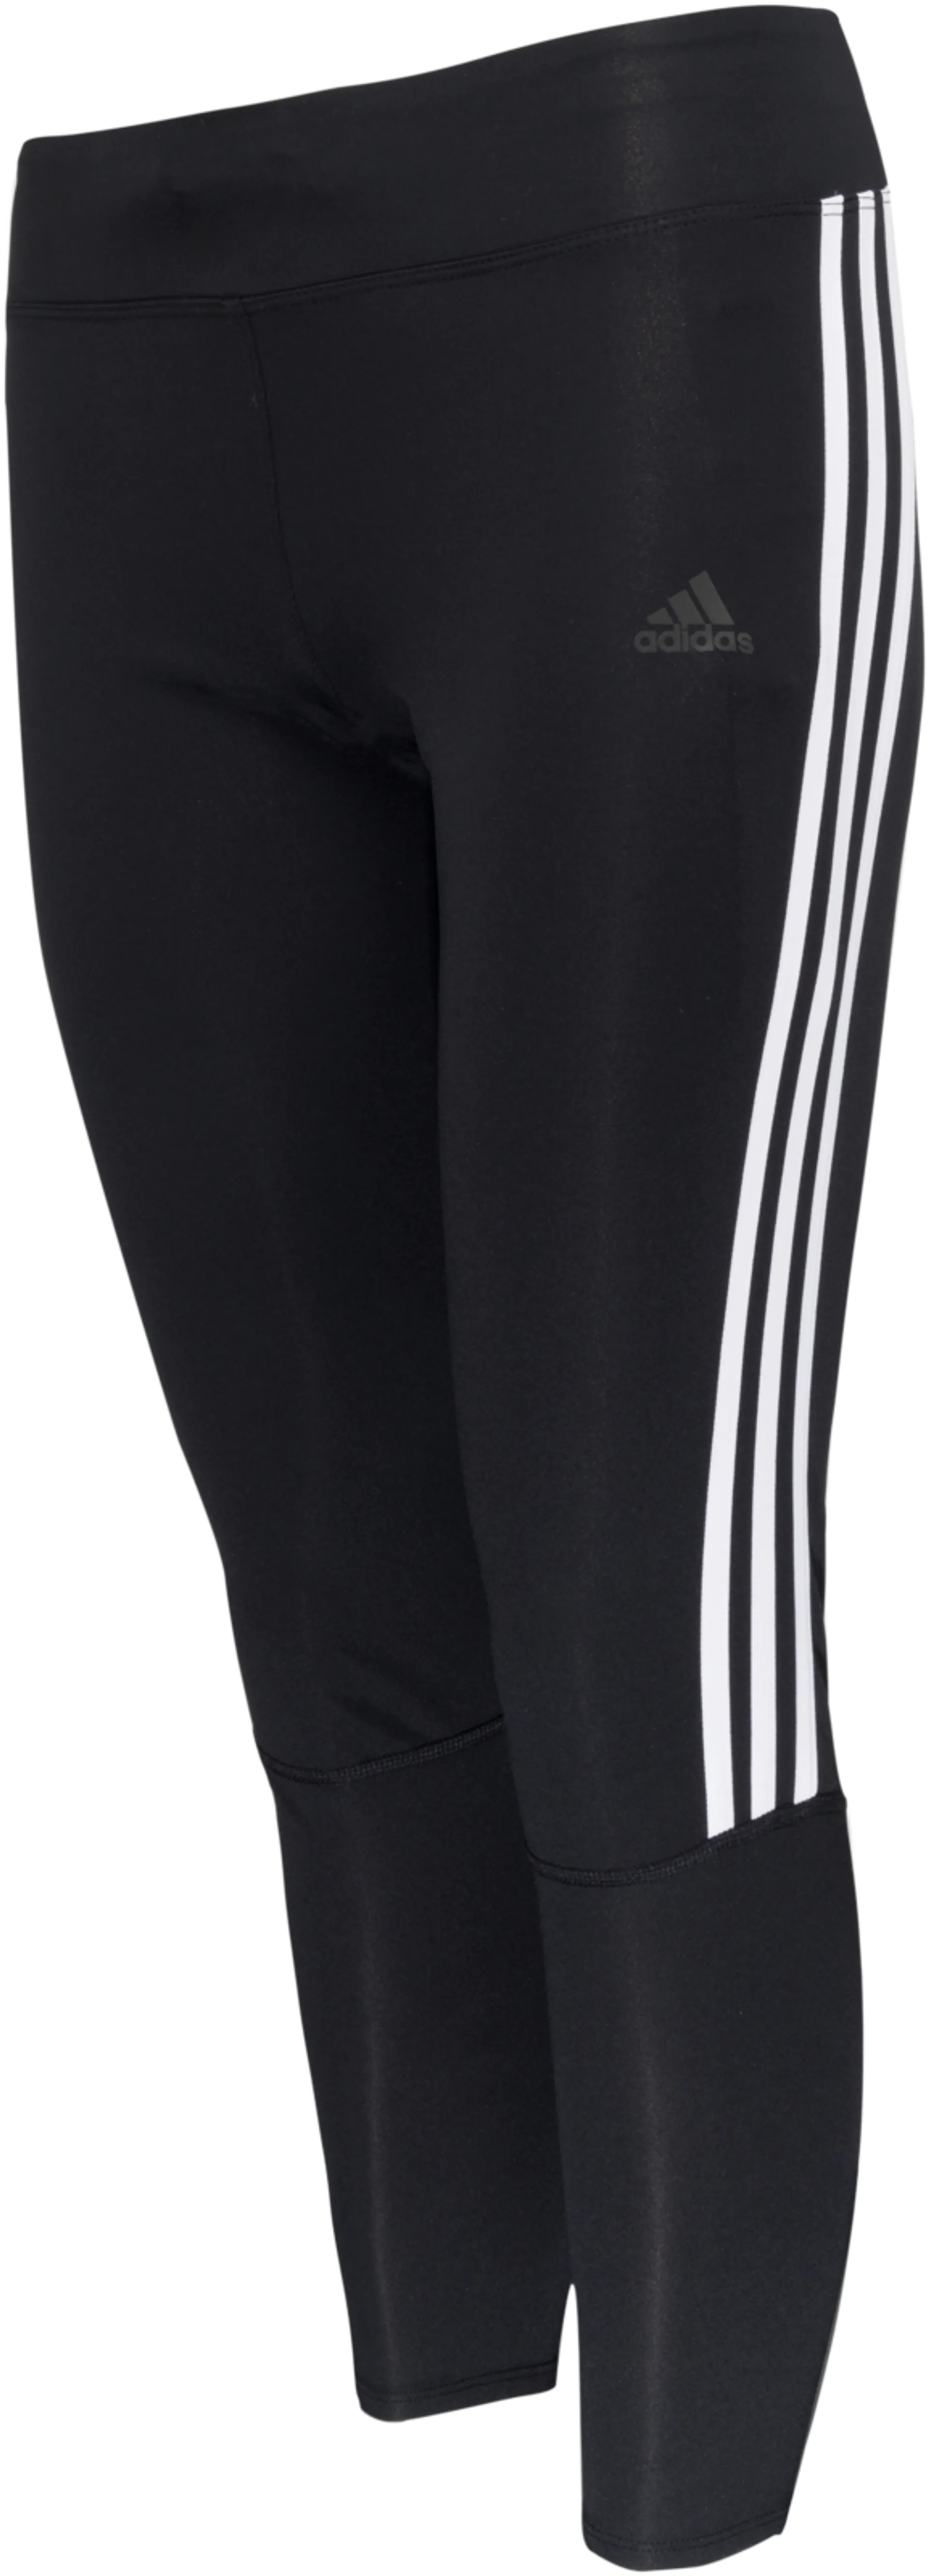 Adidas naisten leggingsit CZ8095 - BLACK